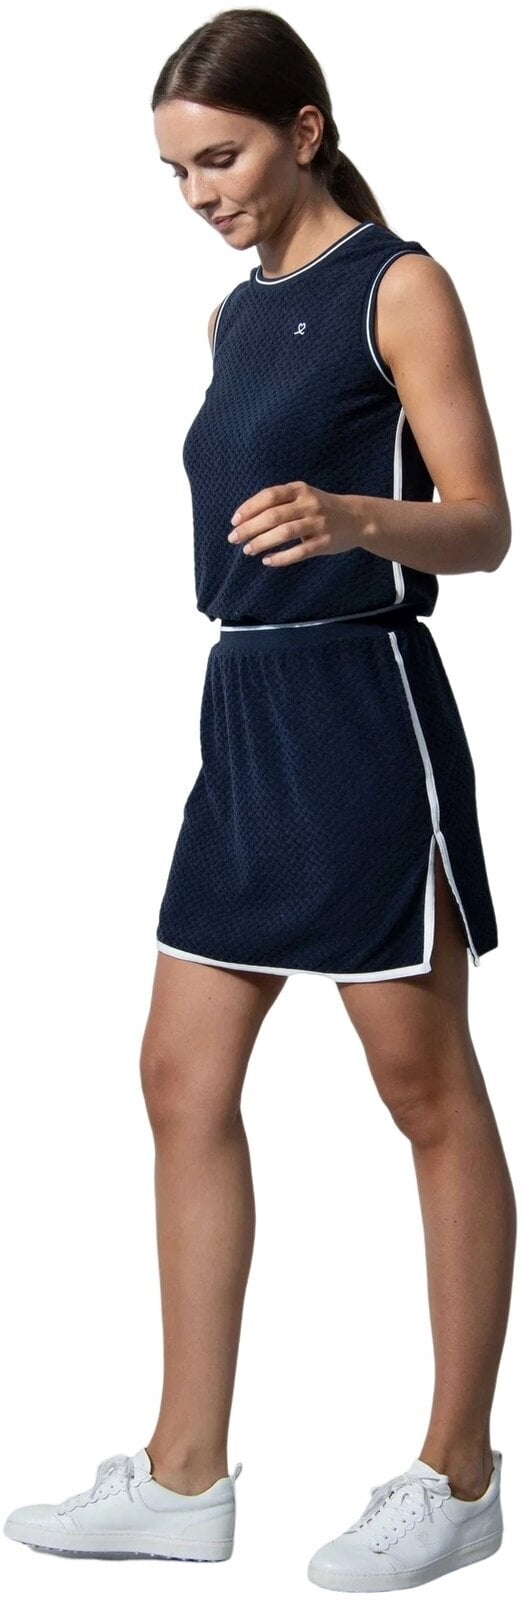 Skirt / Dress Daily Sports Brisbane Sleeveless Dress Navy XL